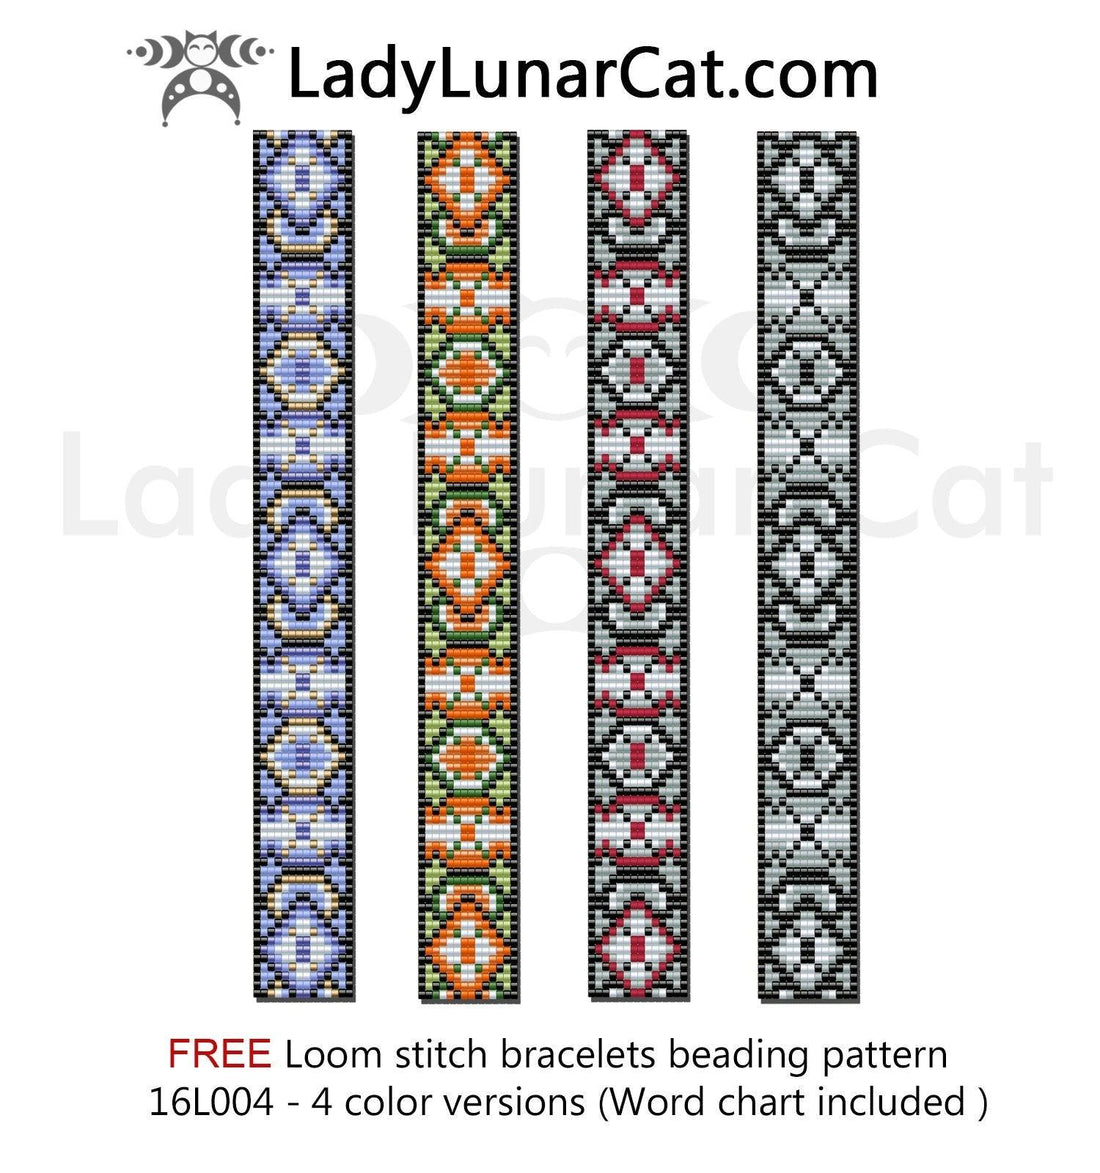 Free Loom stitch bracelets patterns 16L004 - 4 color versions LadyLunarCat